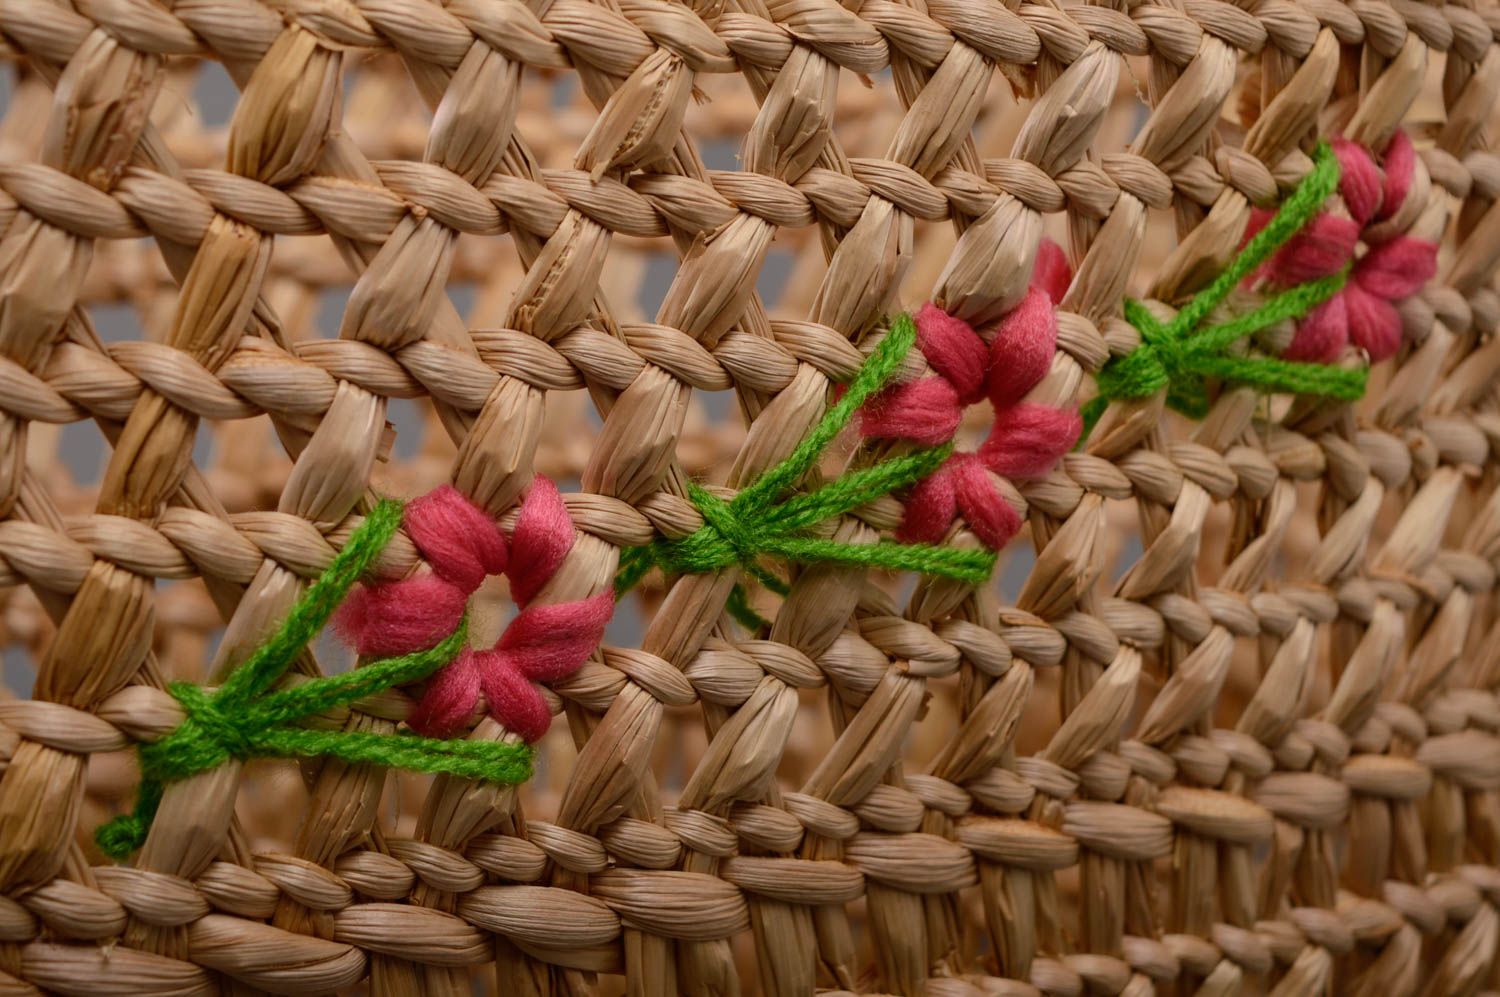 Reedmace basket purse with thread flowers photo 2